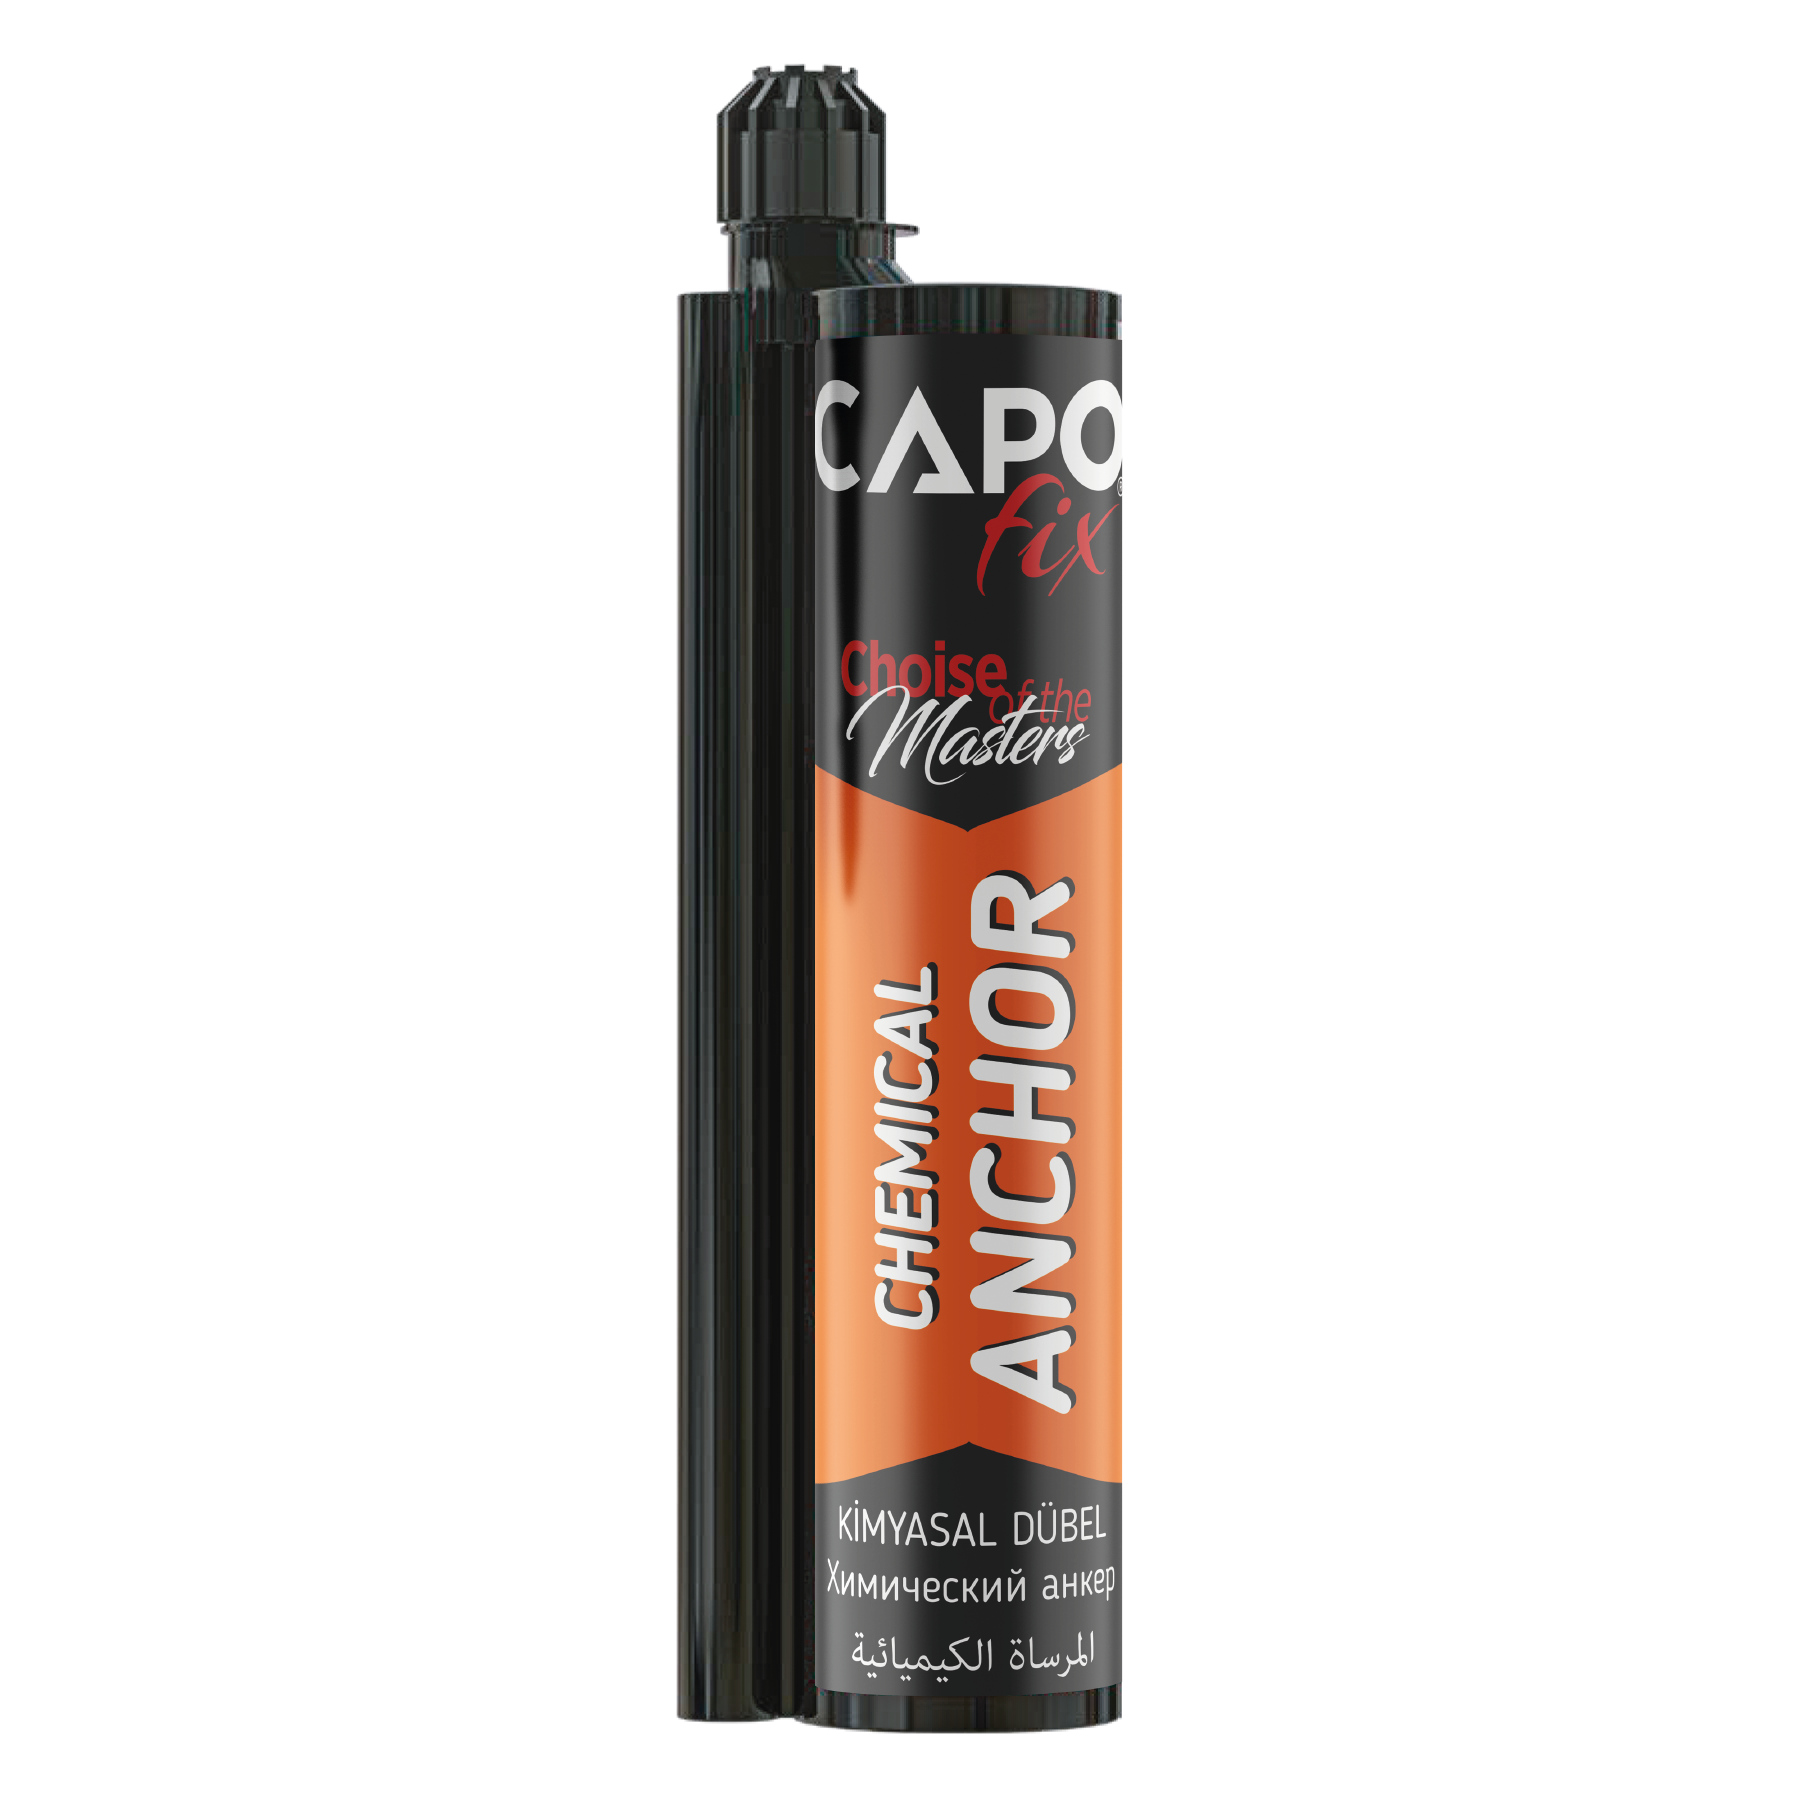 .CAPO fix Chemical Anchor.